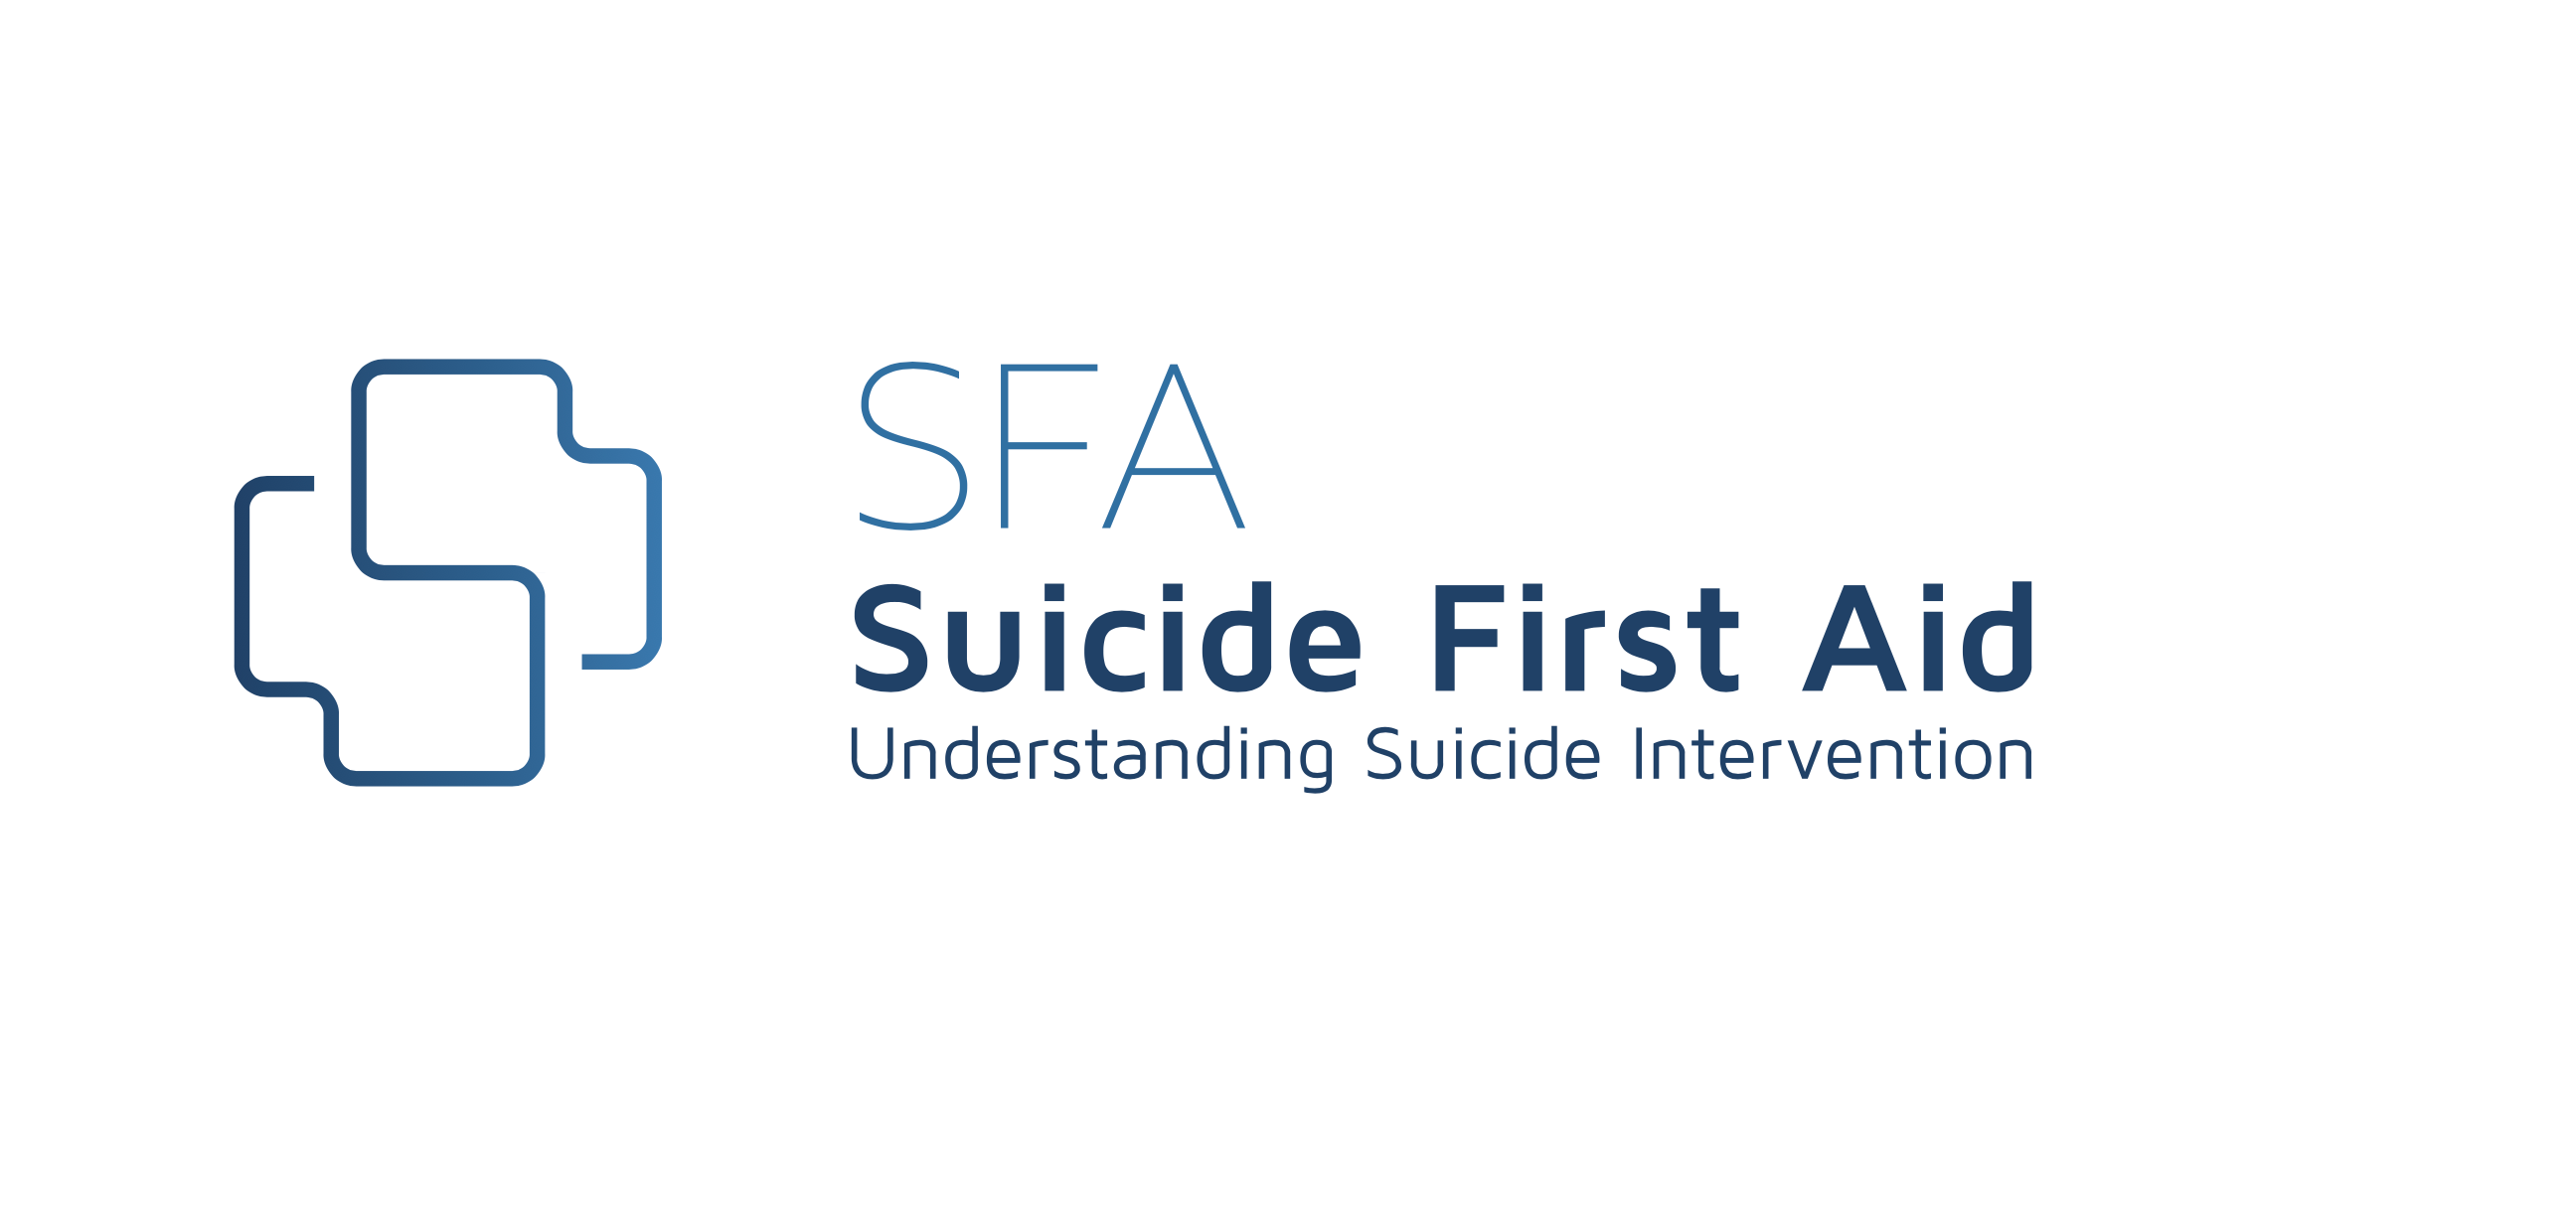 Public Suicide First Aid through Understanding Suicide Intervention (SFAUSI)